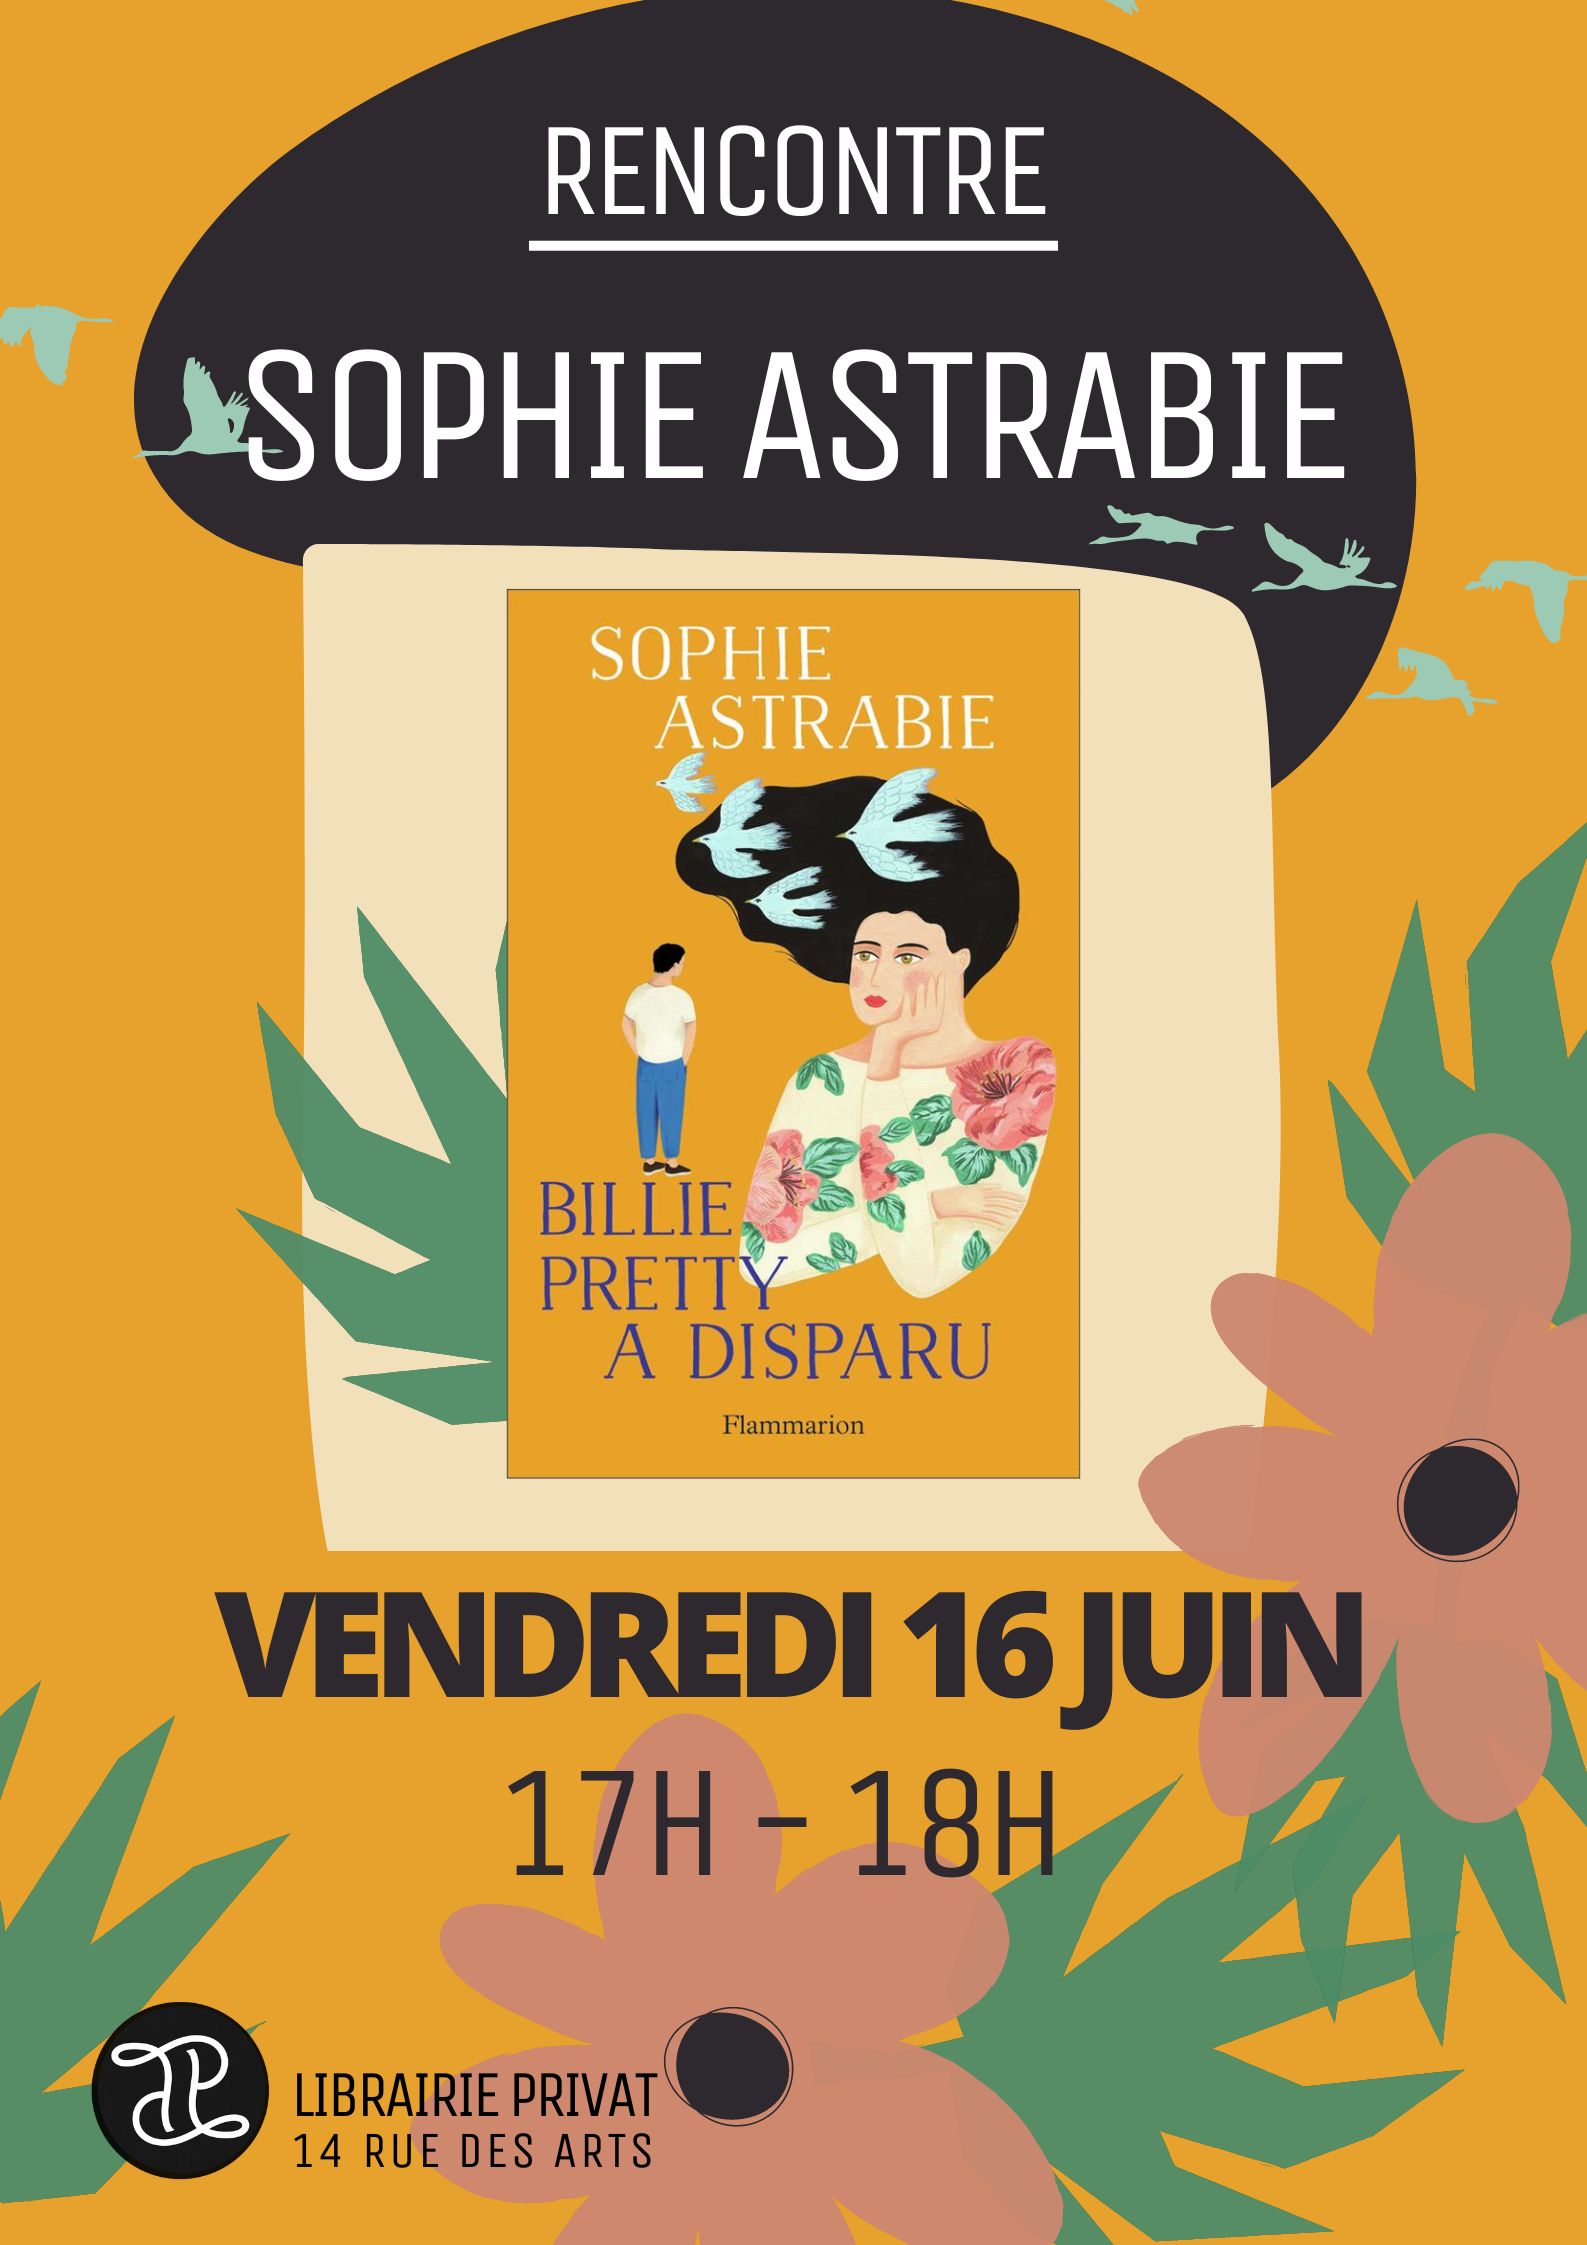 Rencontre - Sophie Astrabie